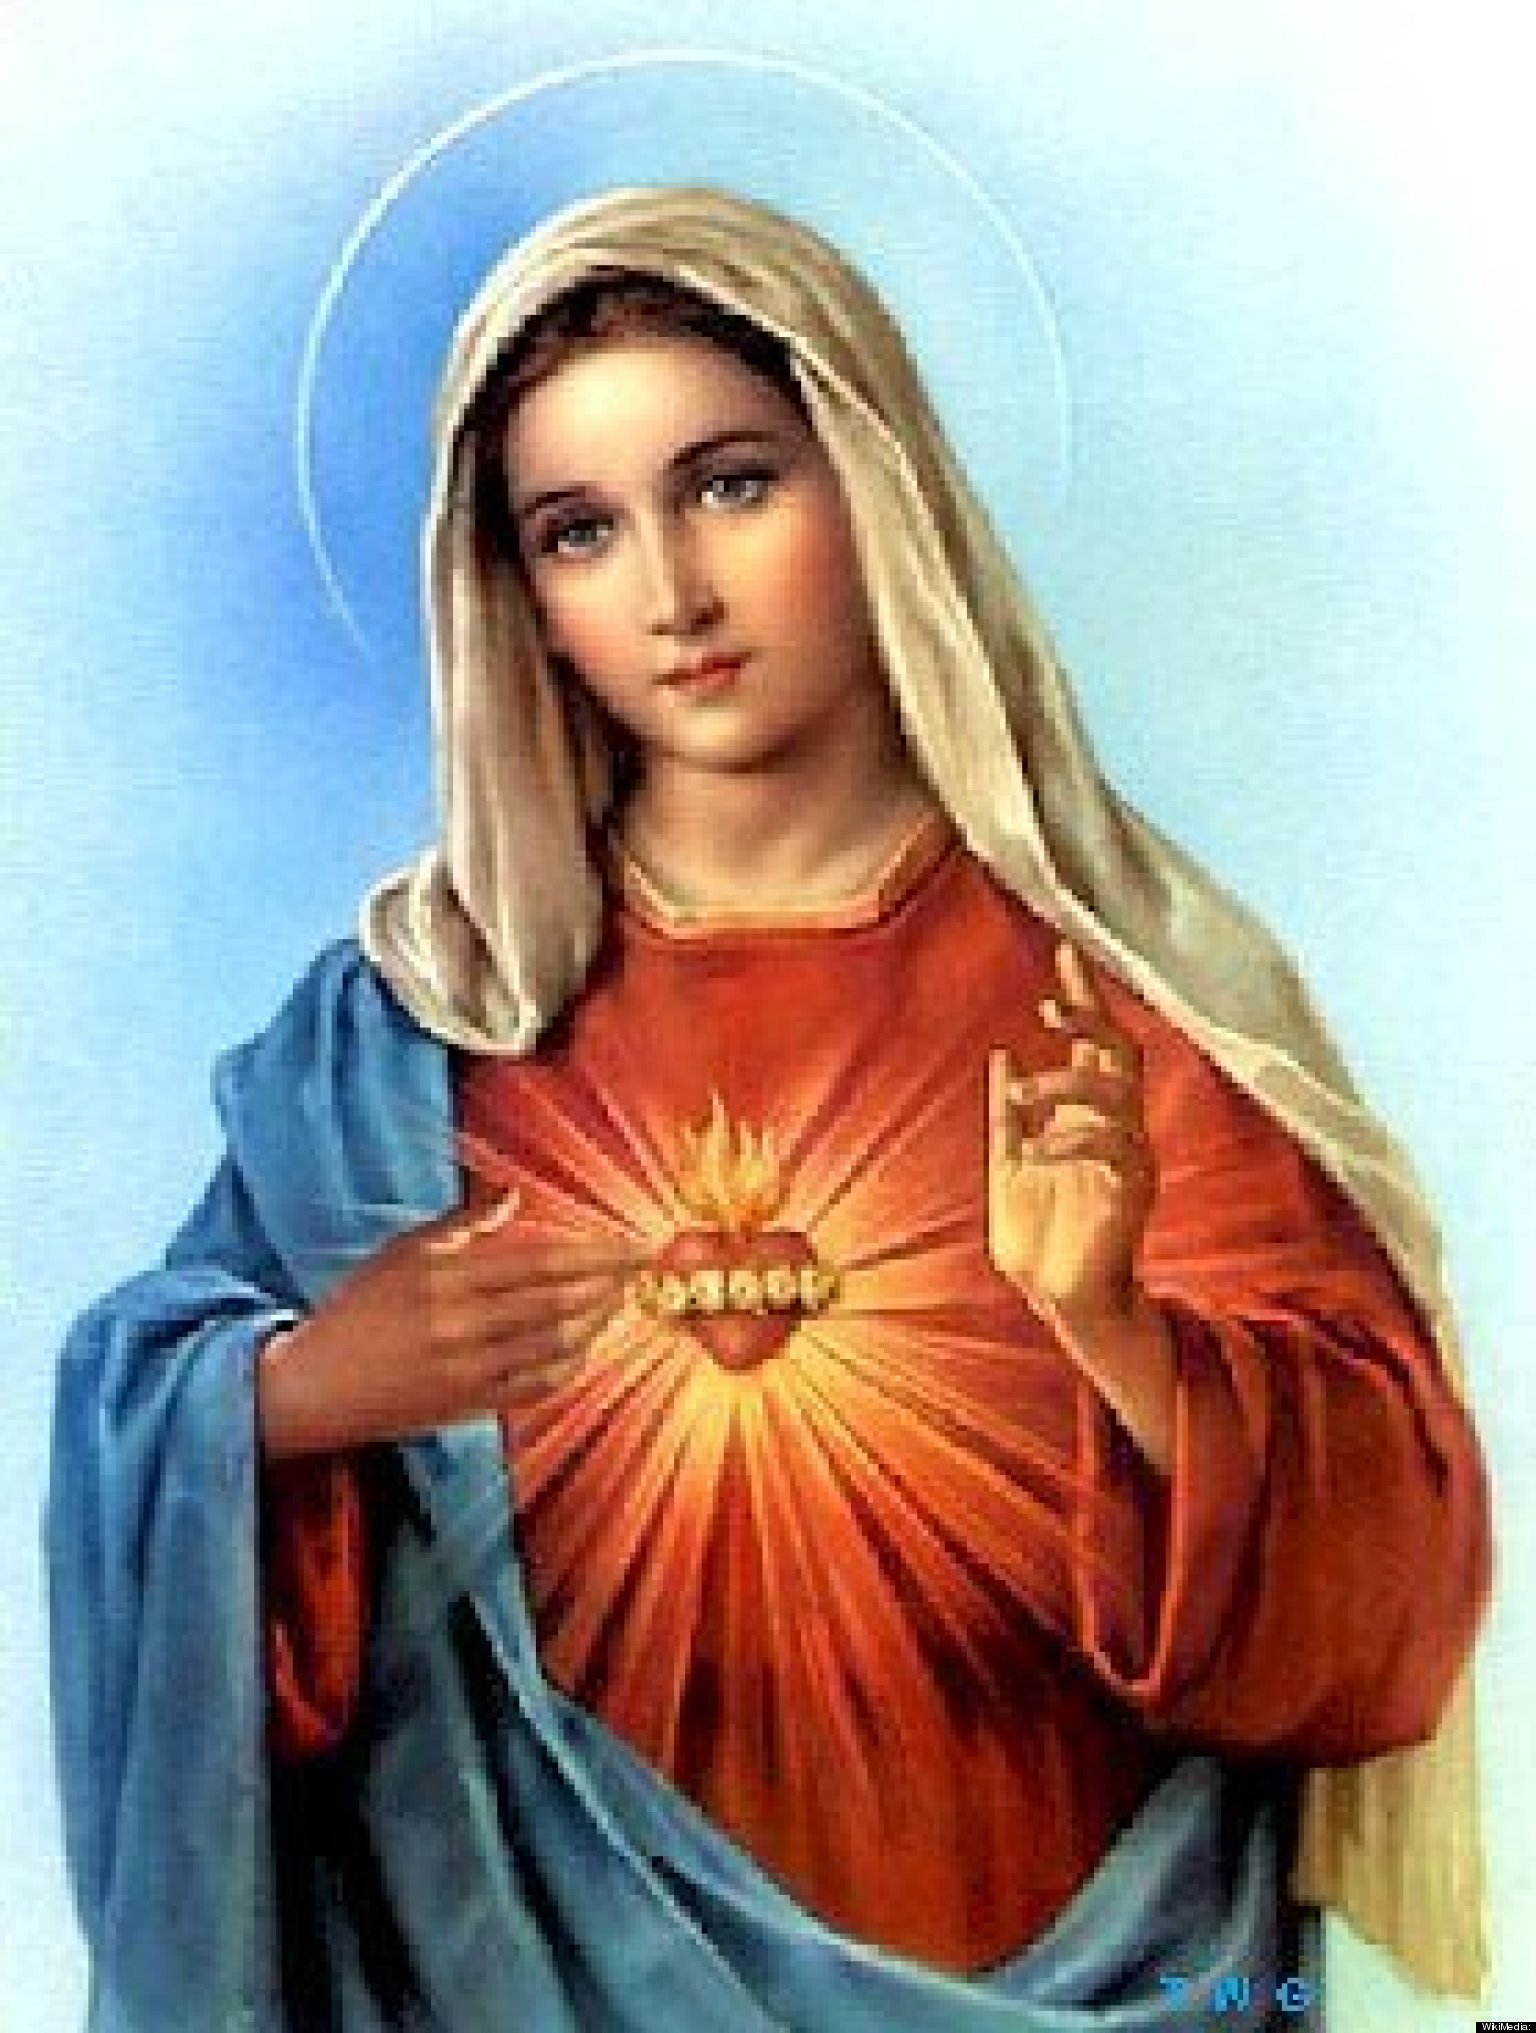 The holy virgin mary